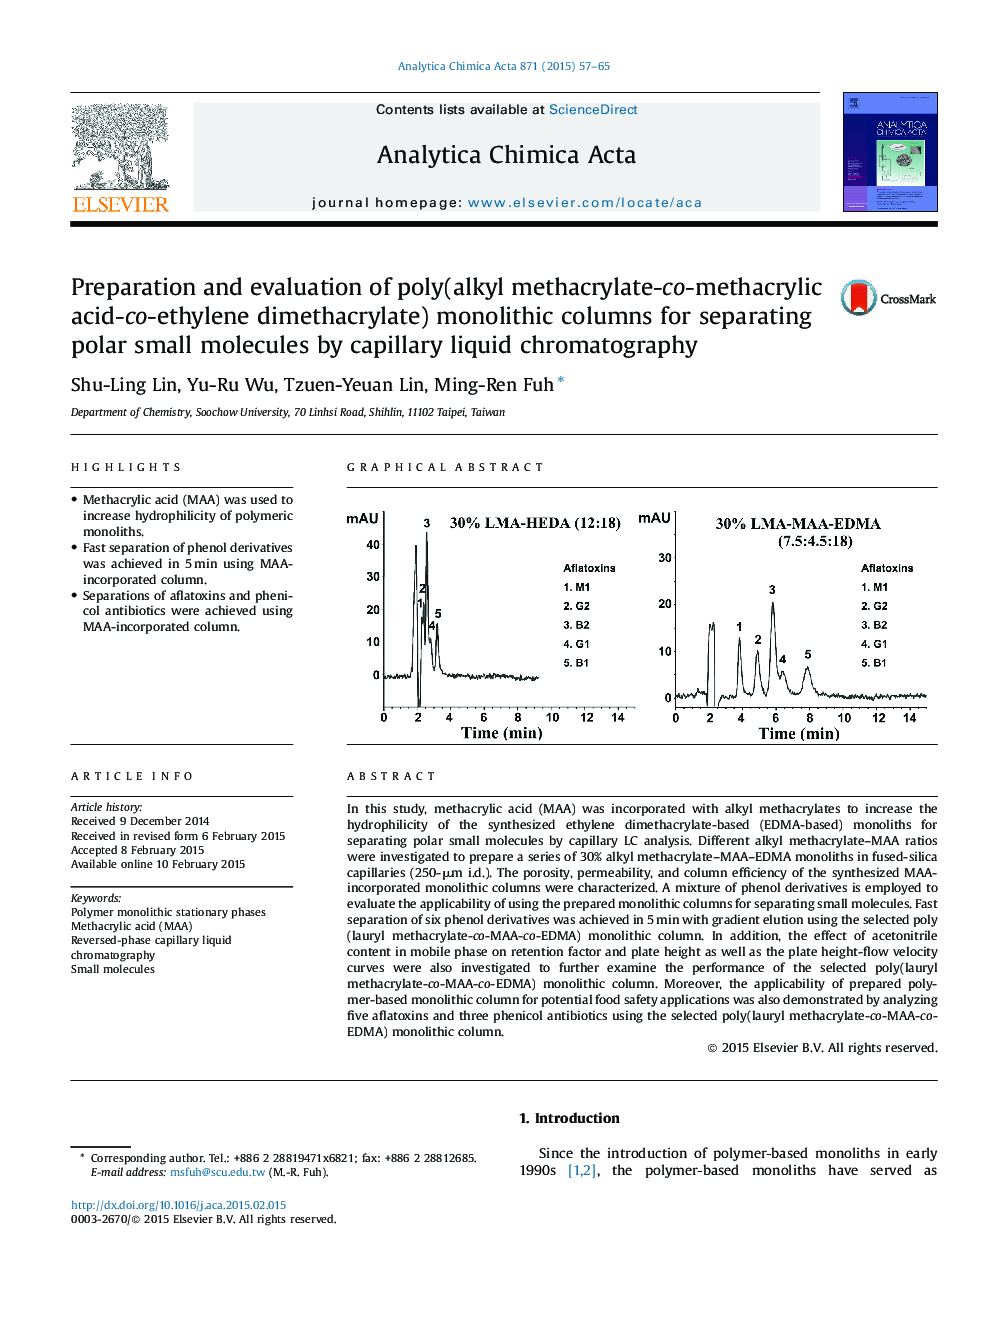 Preparation and evaluation of poly(alkyl methacrylate-co-methacrylic acid-co-ethylene dimethacrylate) monolithic columns for separating polar small molecules by capillary liquid chromatography